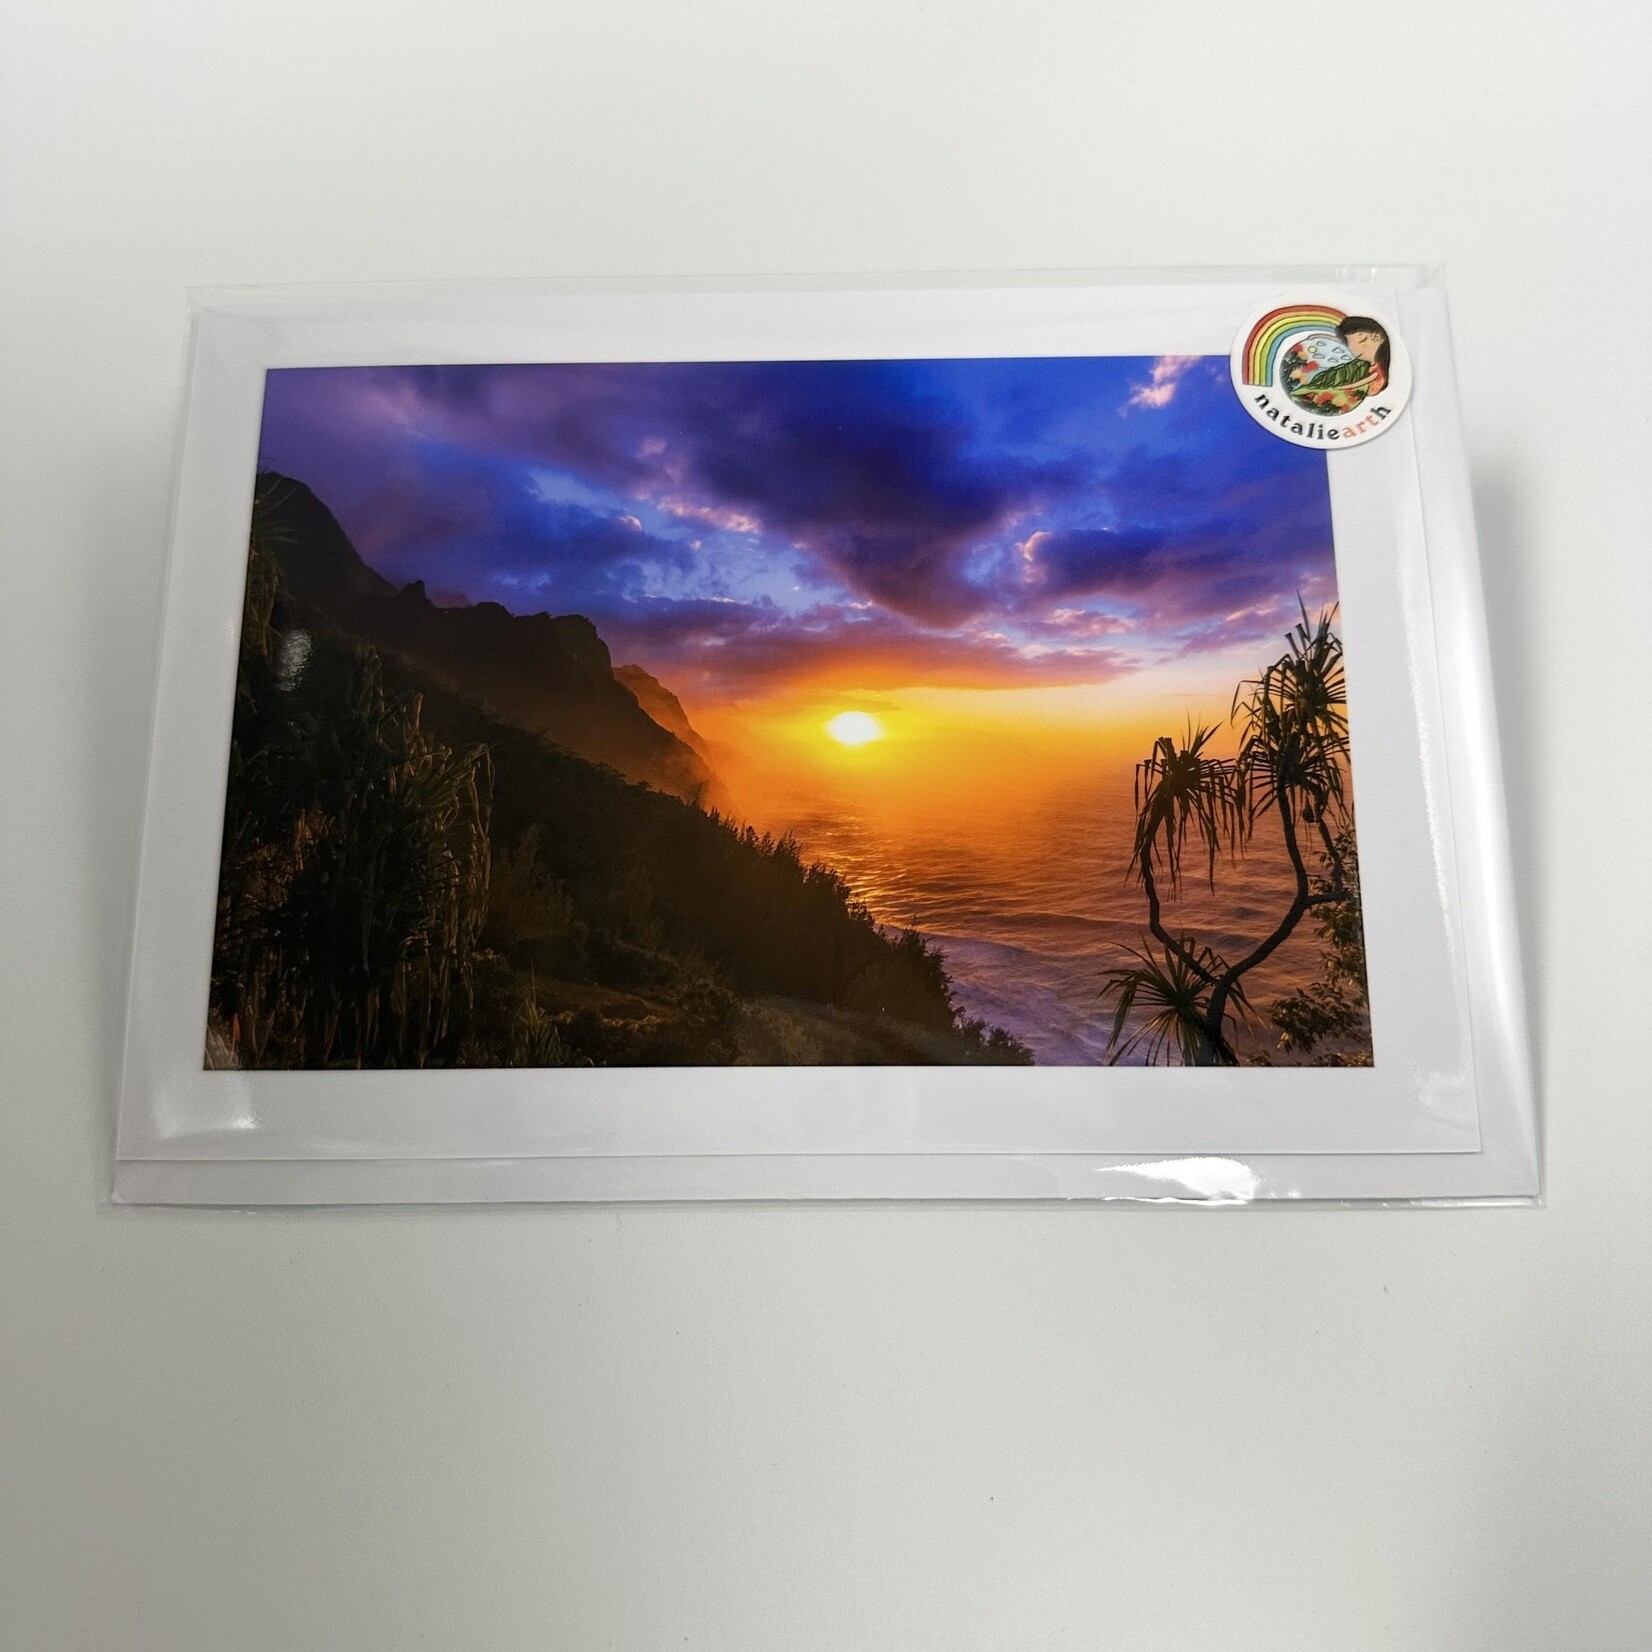 Natalie Earth LLC Ke Alaula A NaPali - Frame-able Greeting Card 5” x 7”